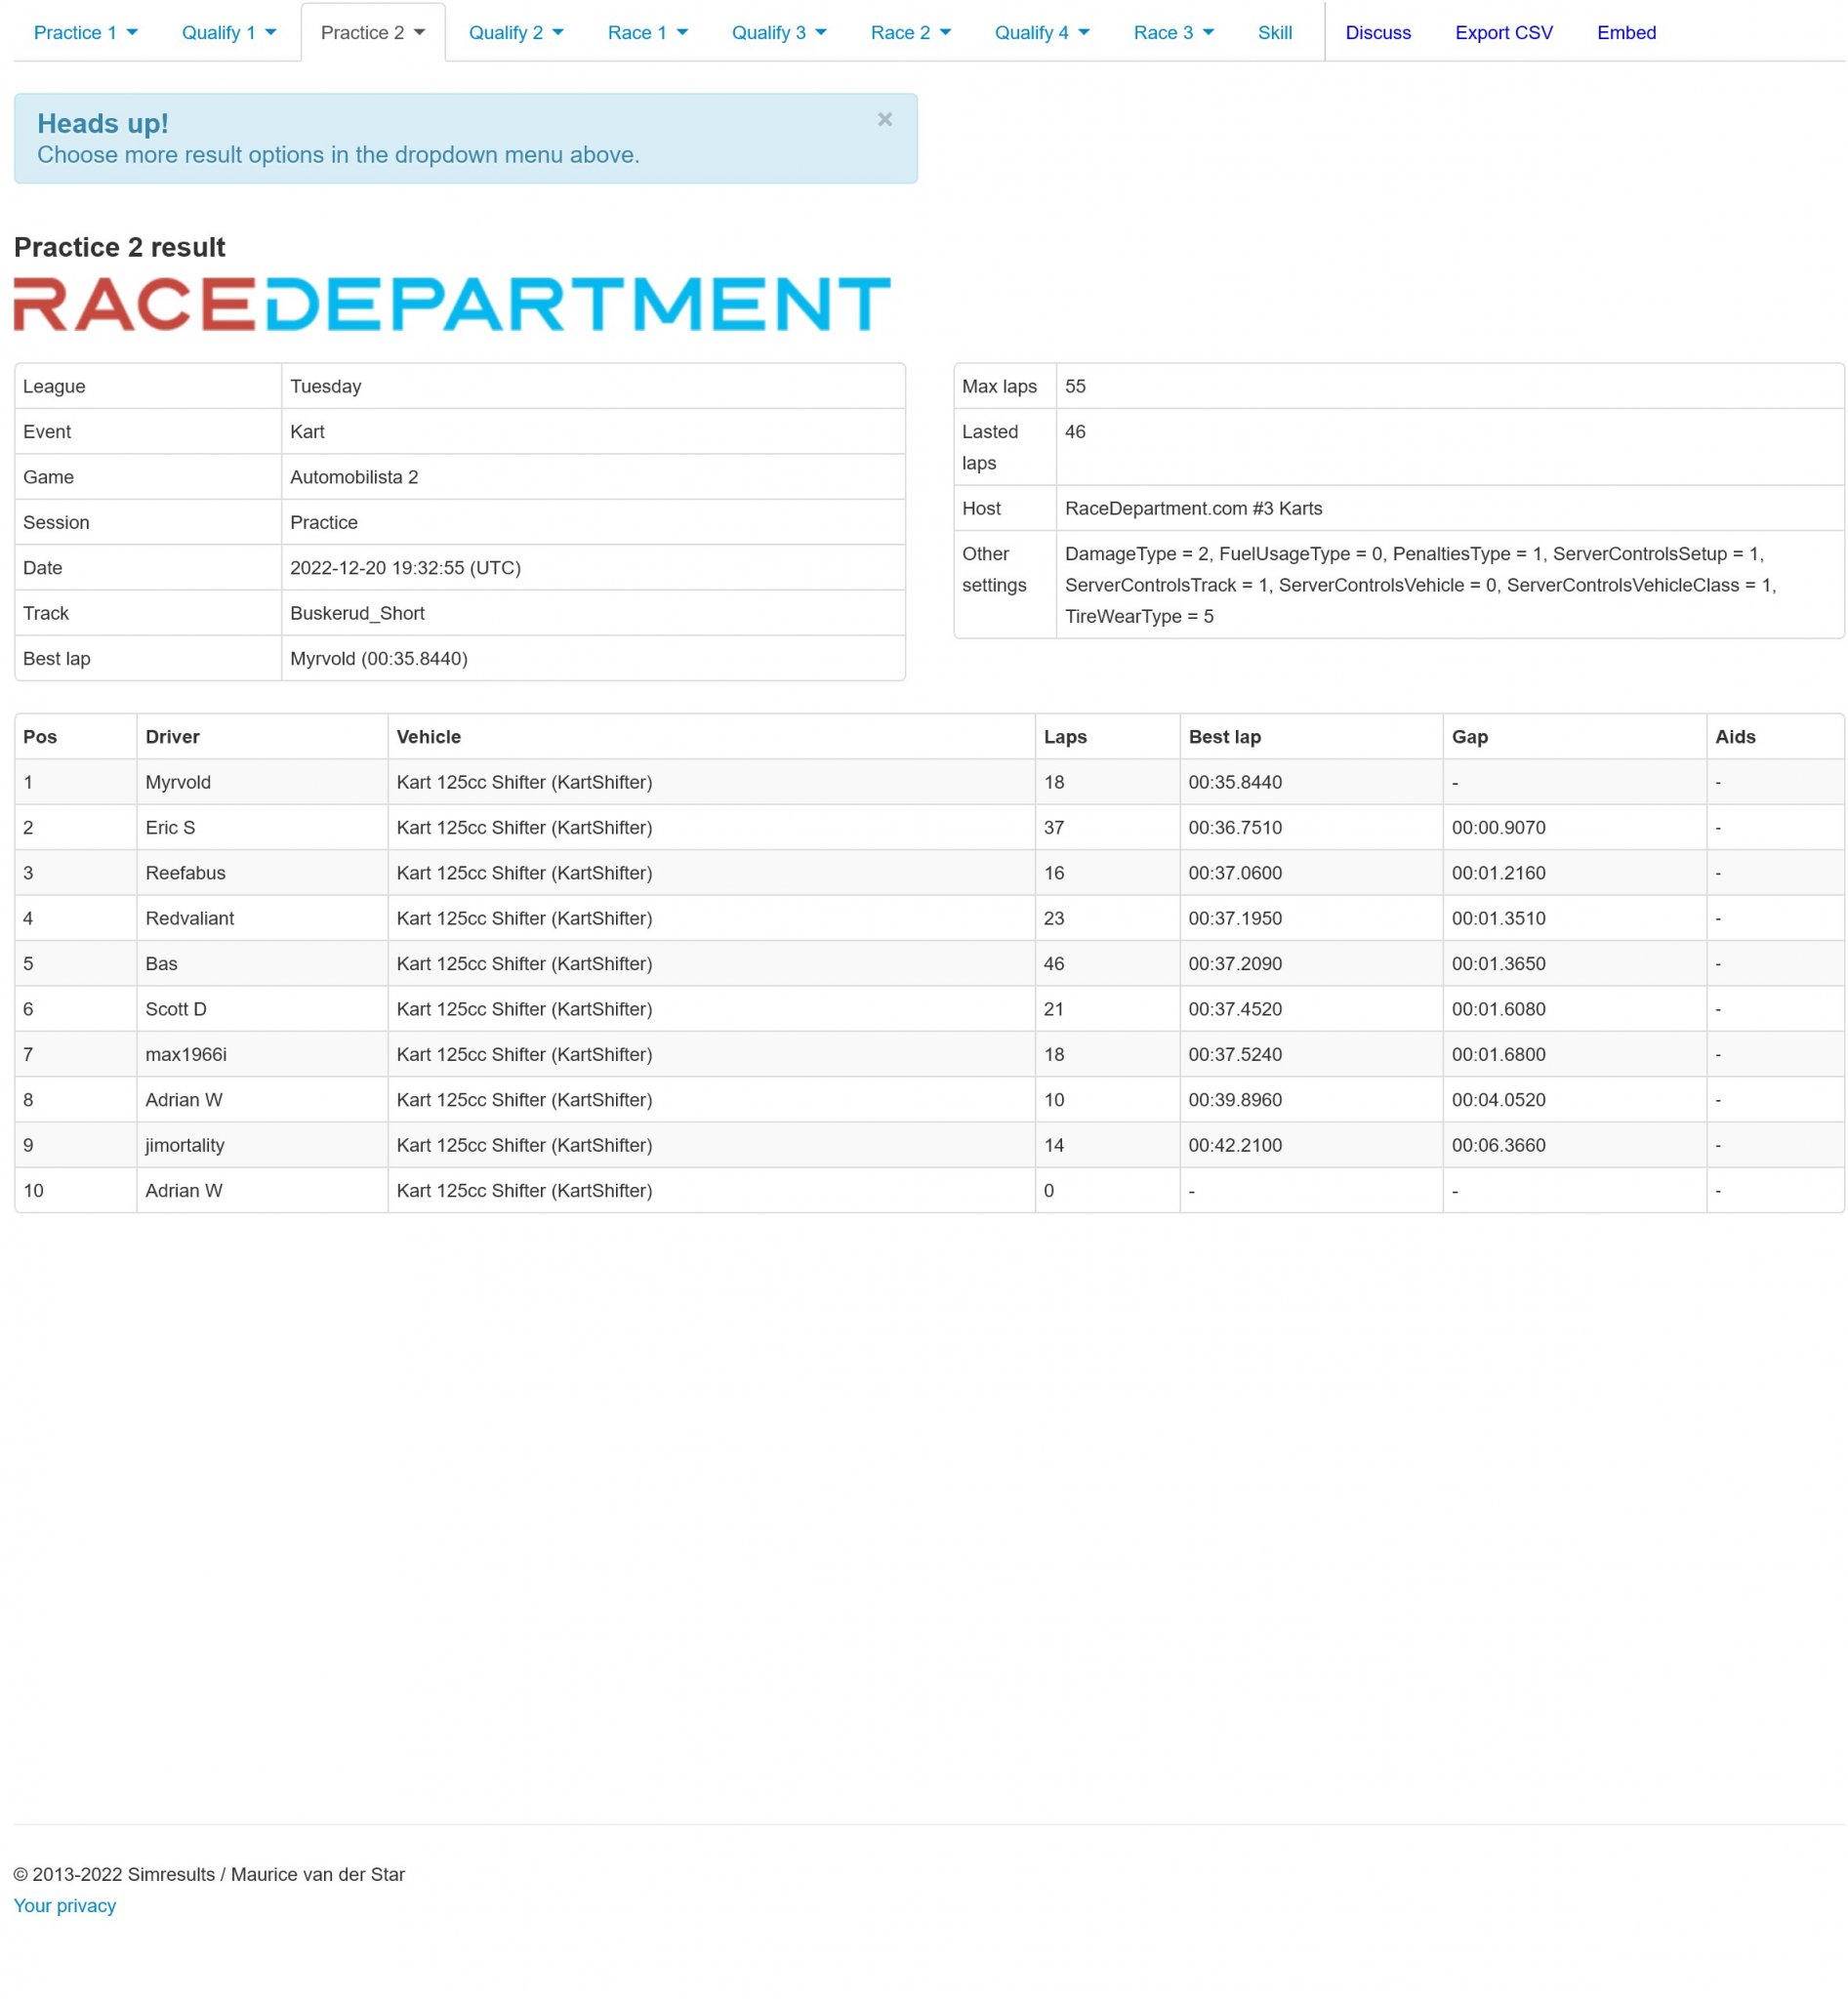 Screenshot 2022-12-20 at 22-33-50 Result 221220-r22 - Buskerud_Short - RaceDepartment.com #3 K...jpg